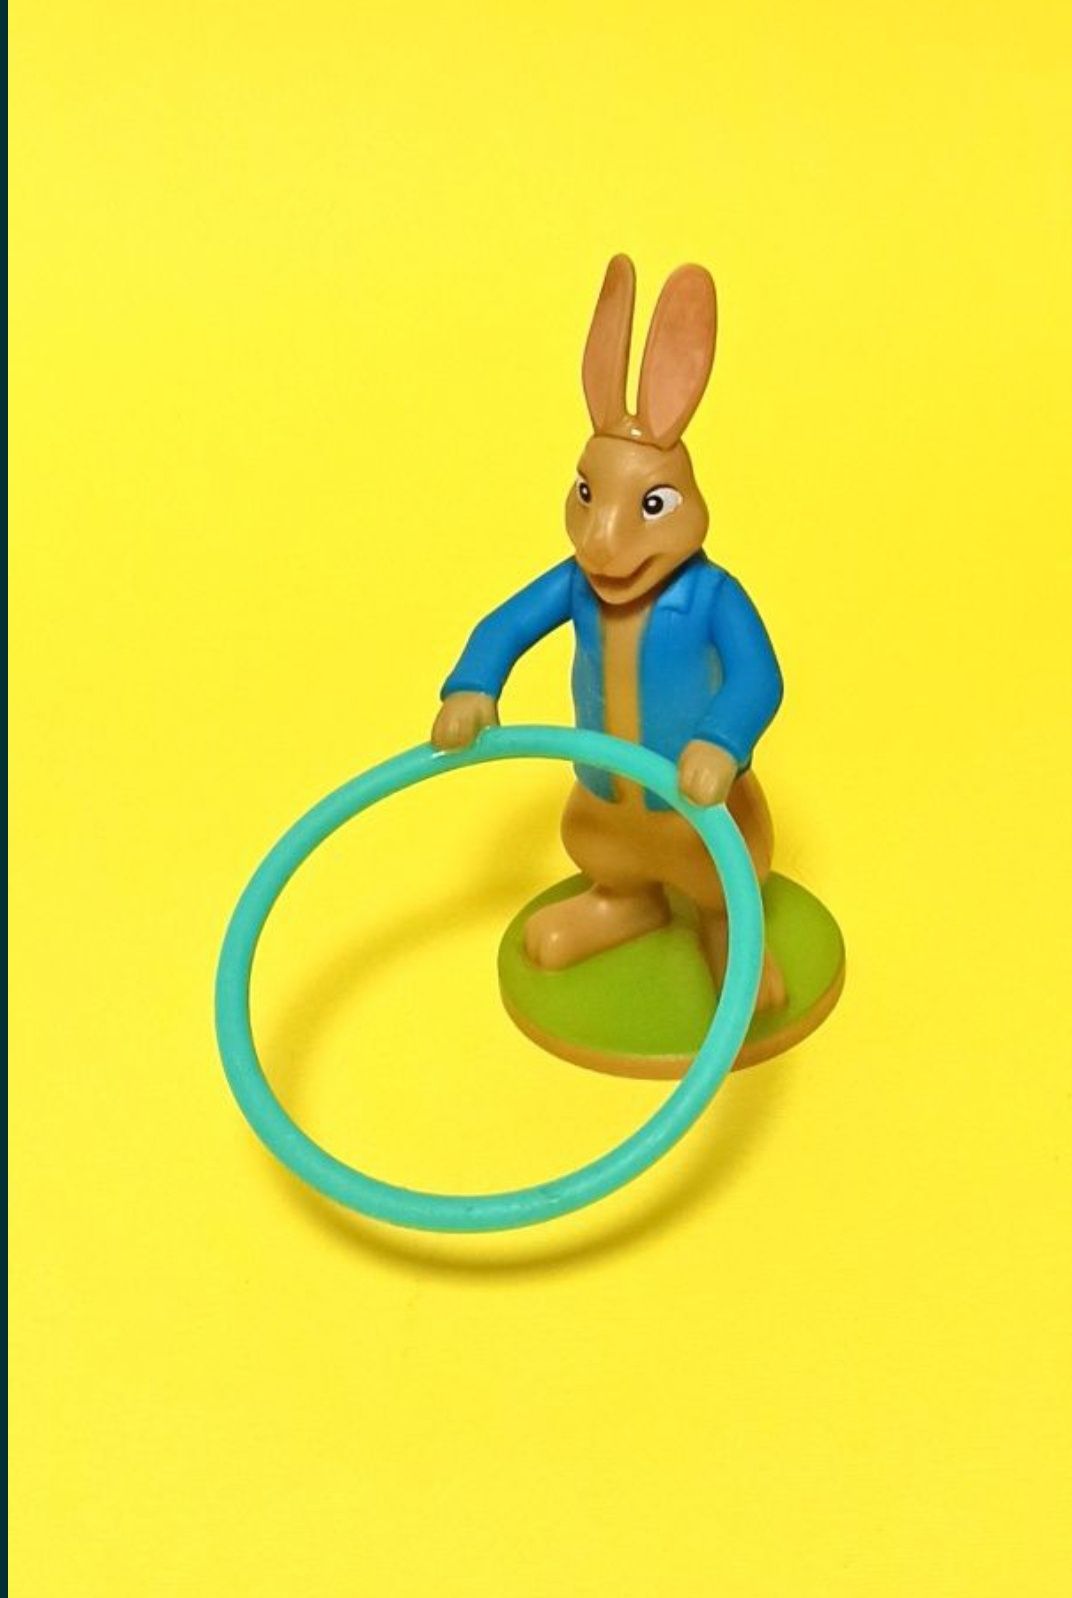 Продам игрушку кролик Питер
Без мяча.